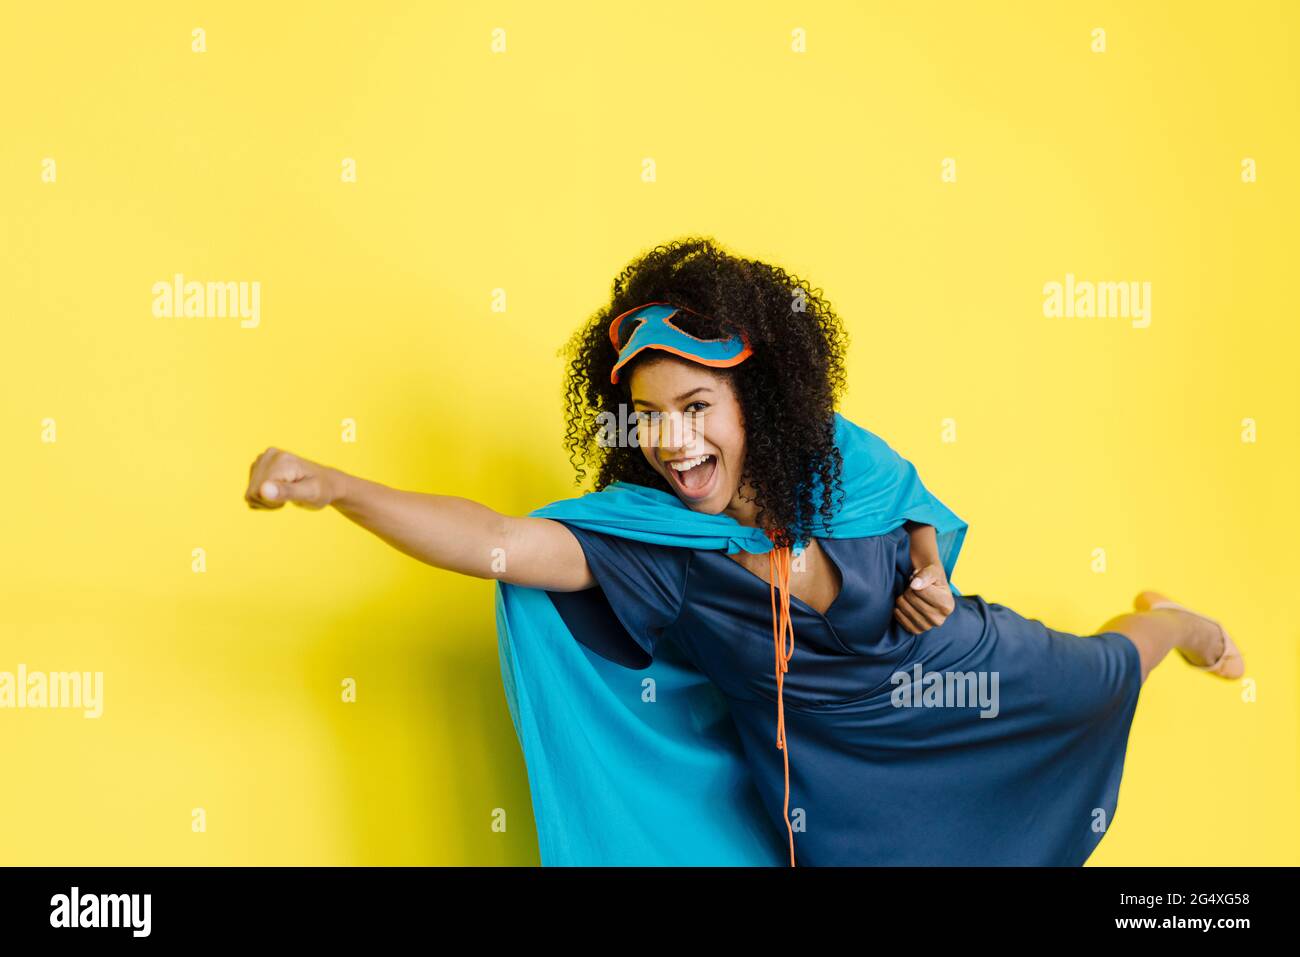 Cheerful woman wearing superhero costume flying by yellow background Stock Photo